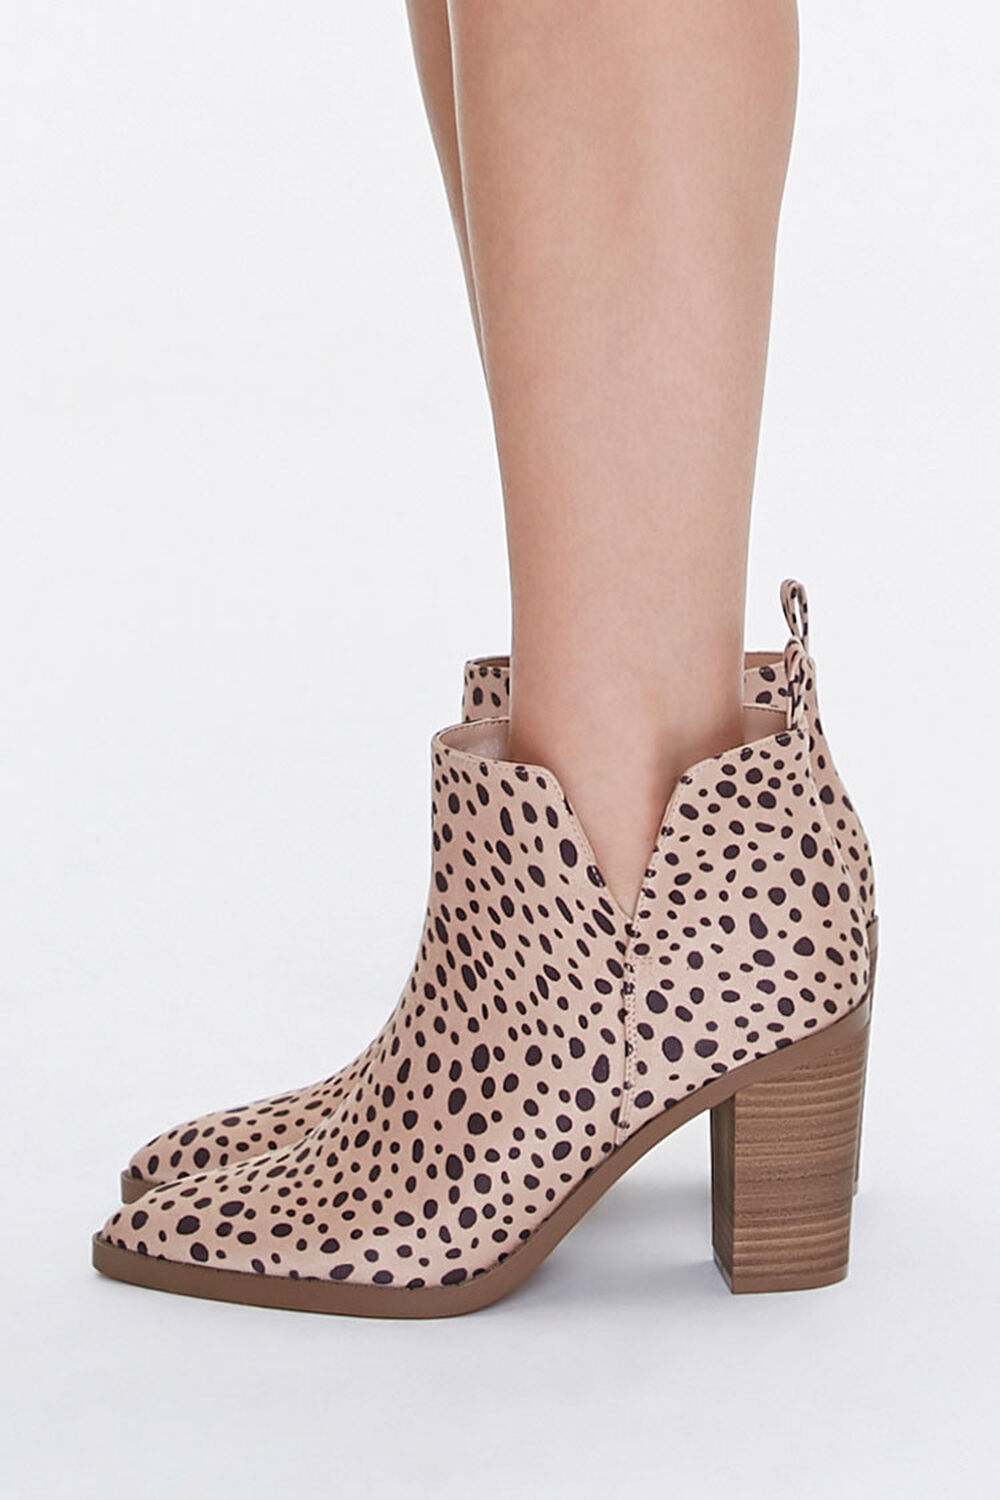 TAN/MULTI Cheetah Stacked Heel Booties, image 2